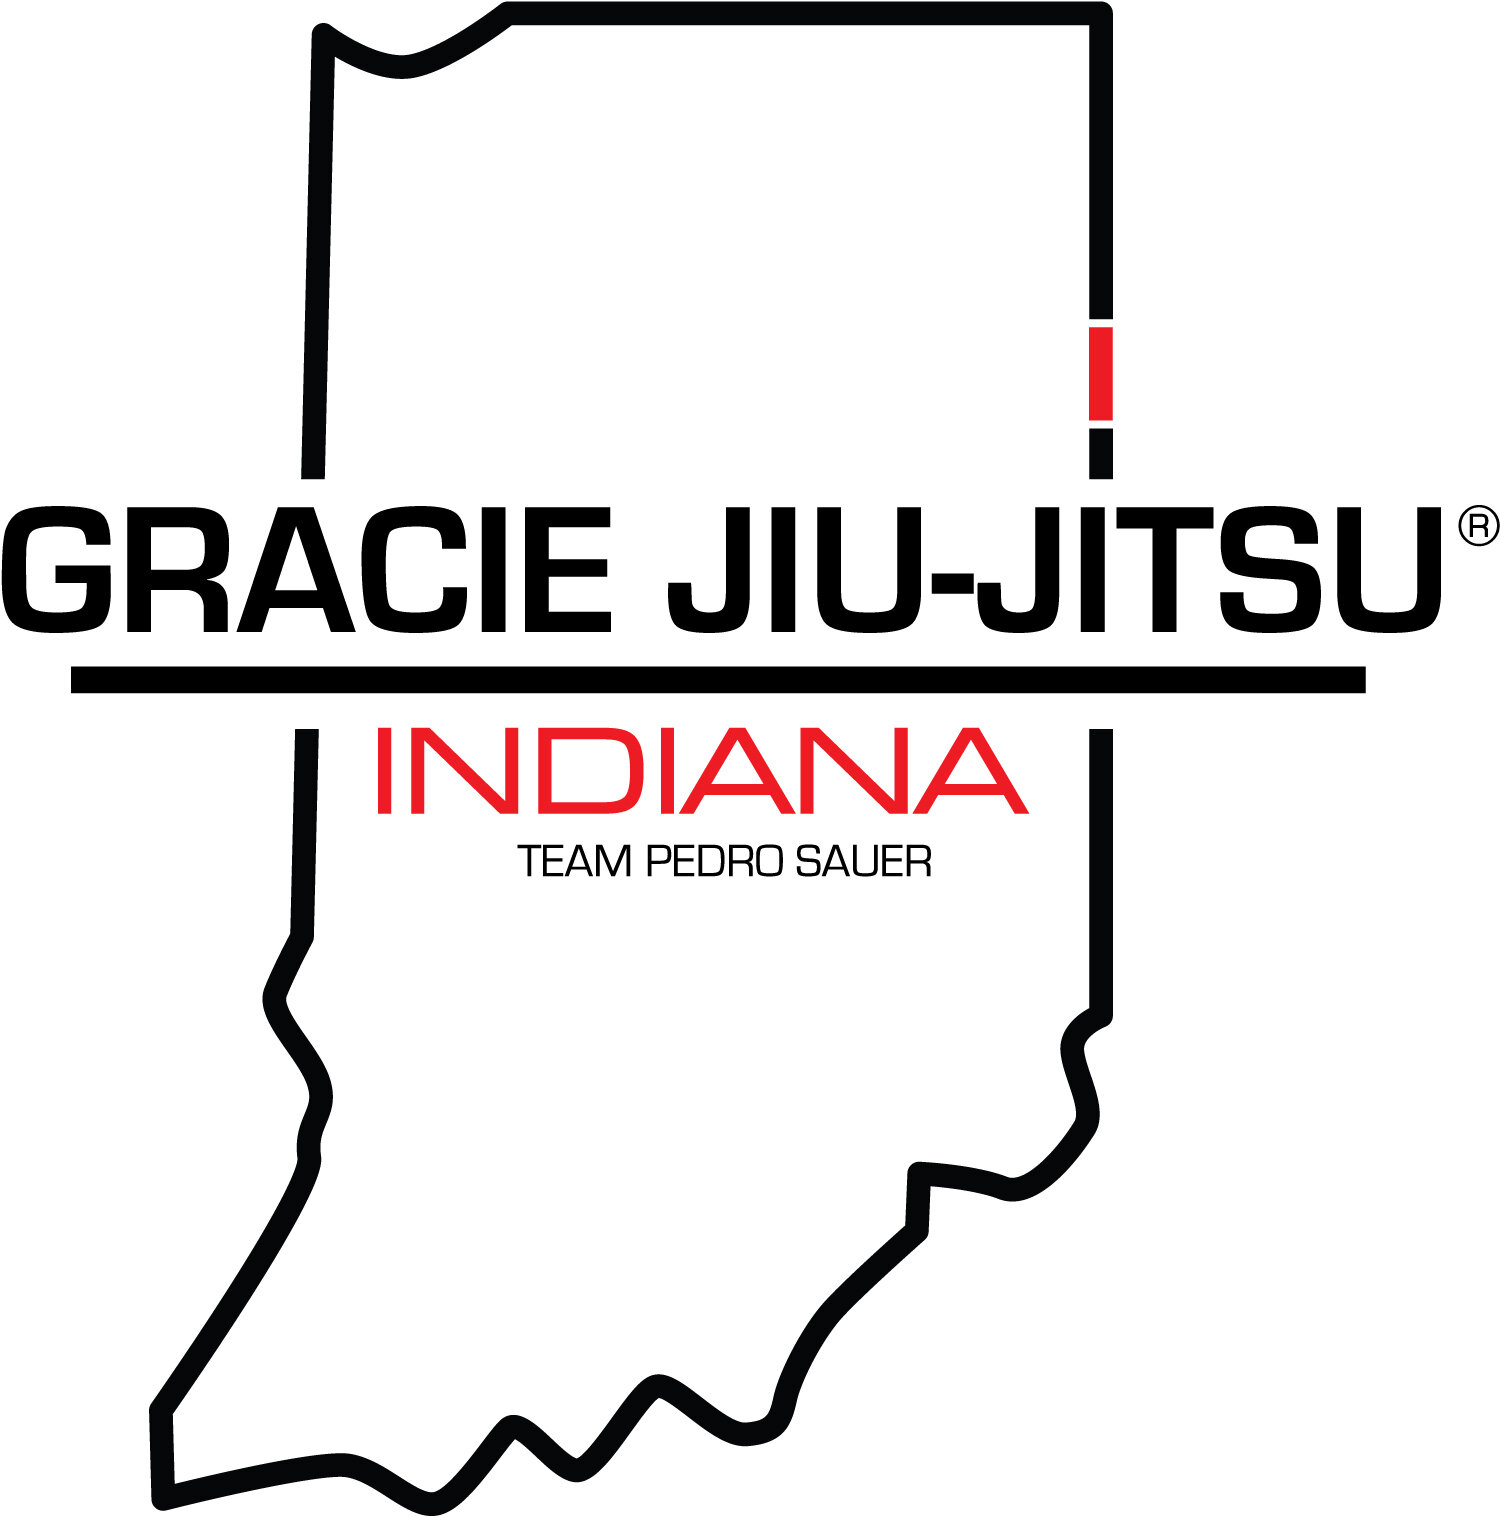 Gracie Jiu Jitsu of Indiana Team Pedro Sauer